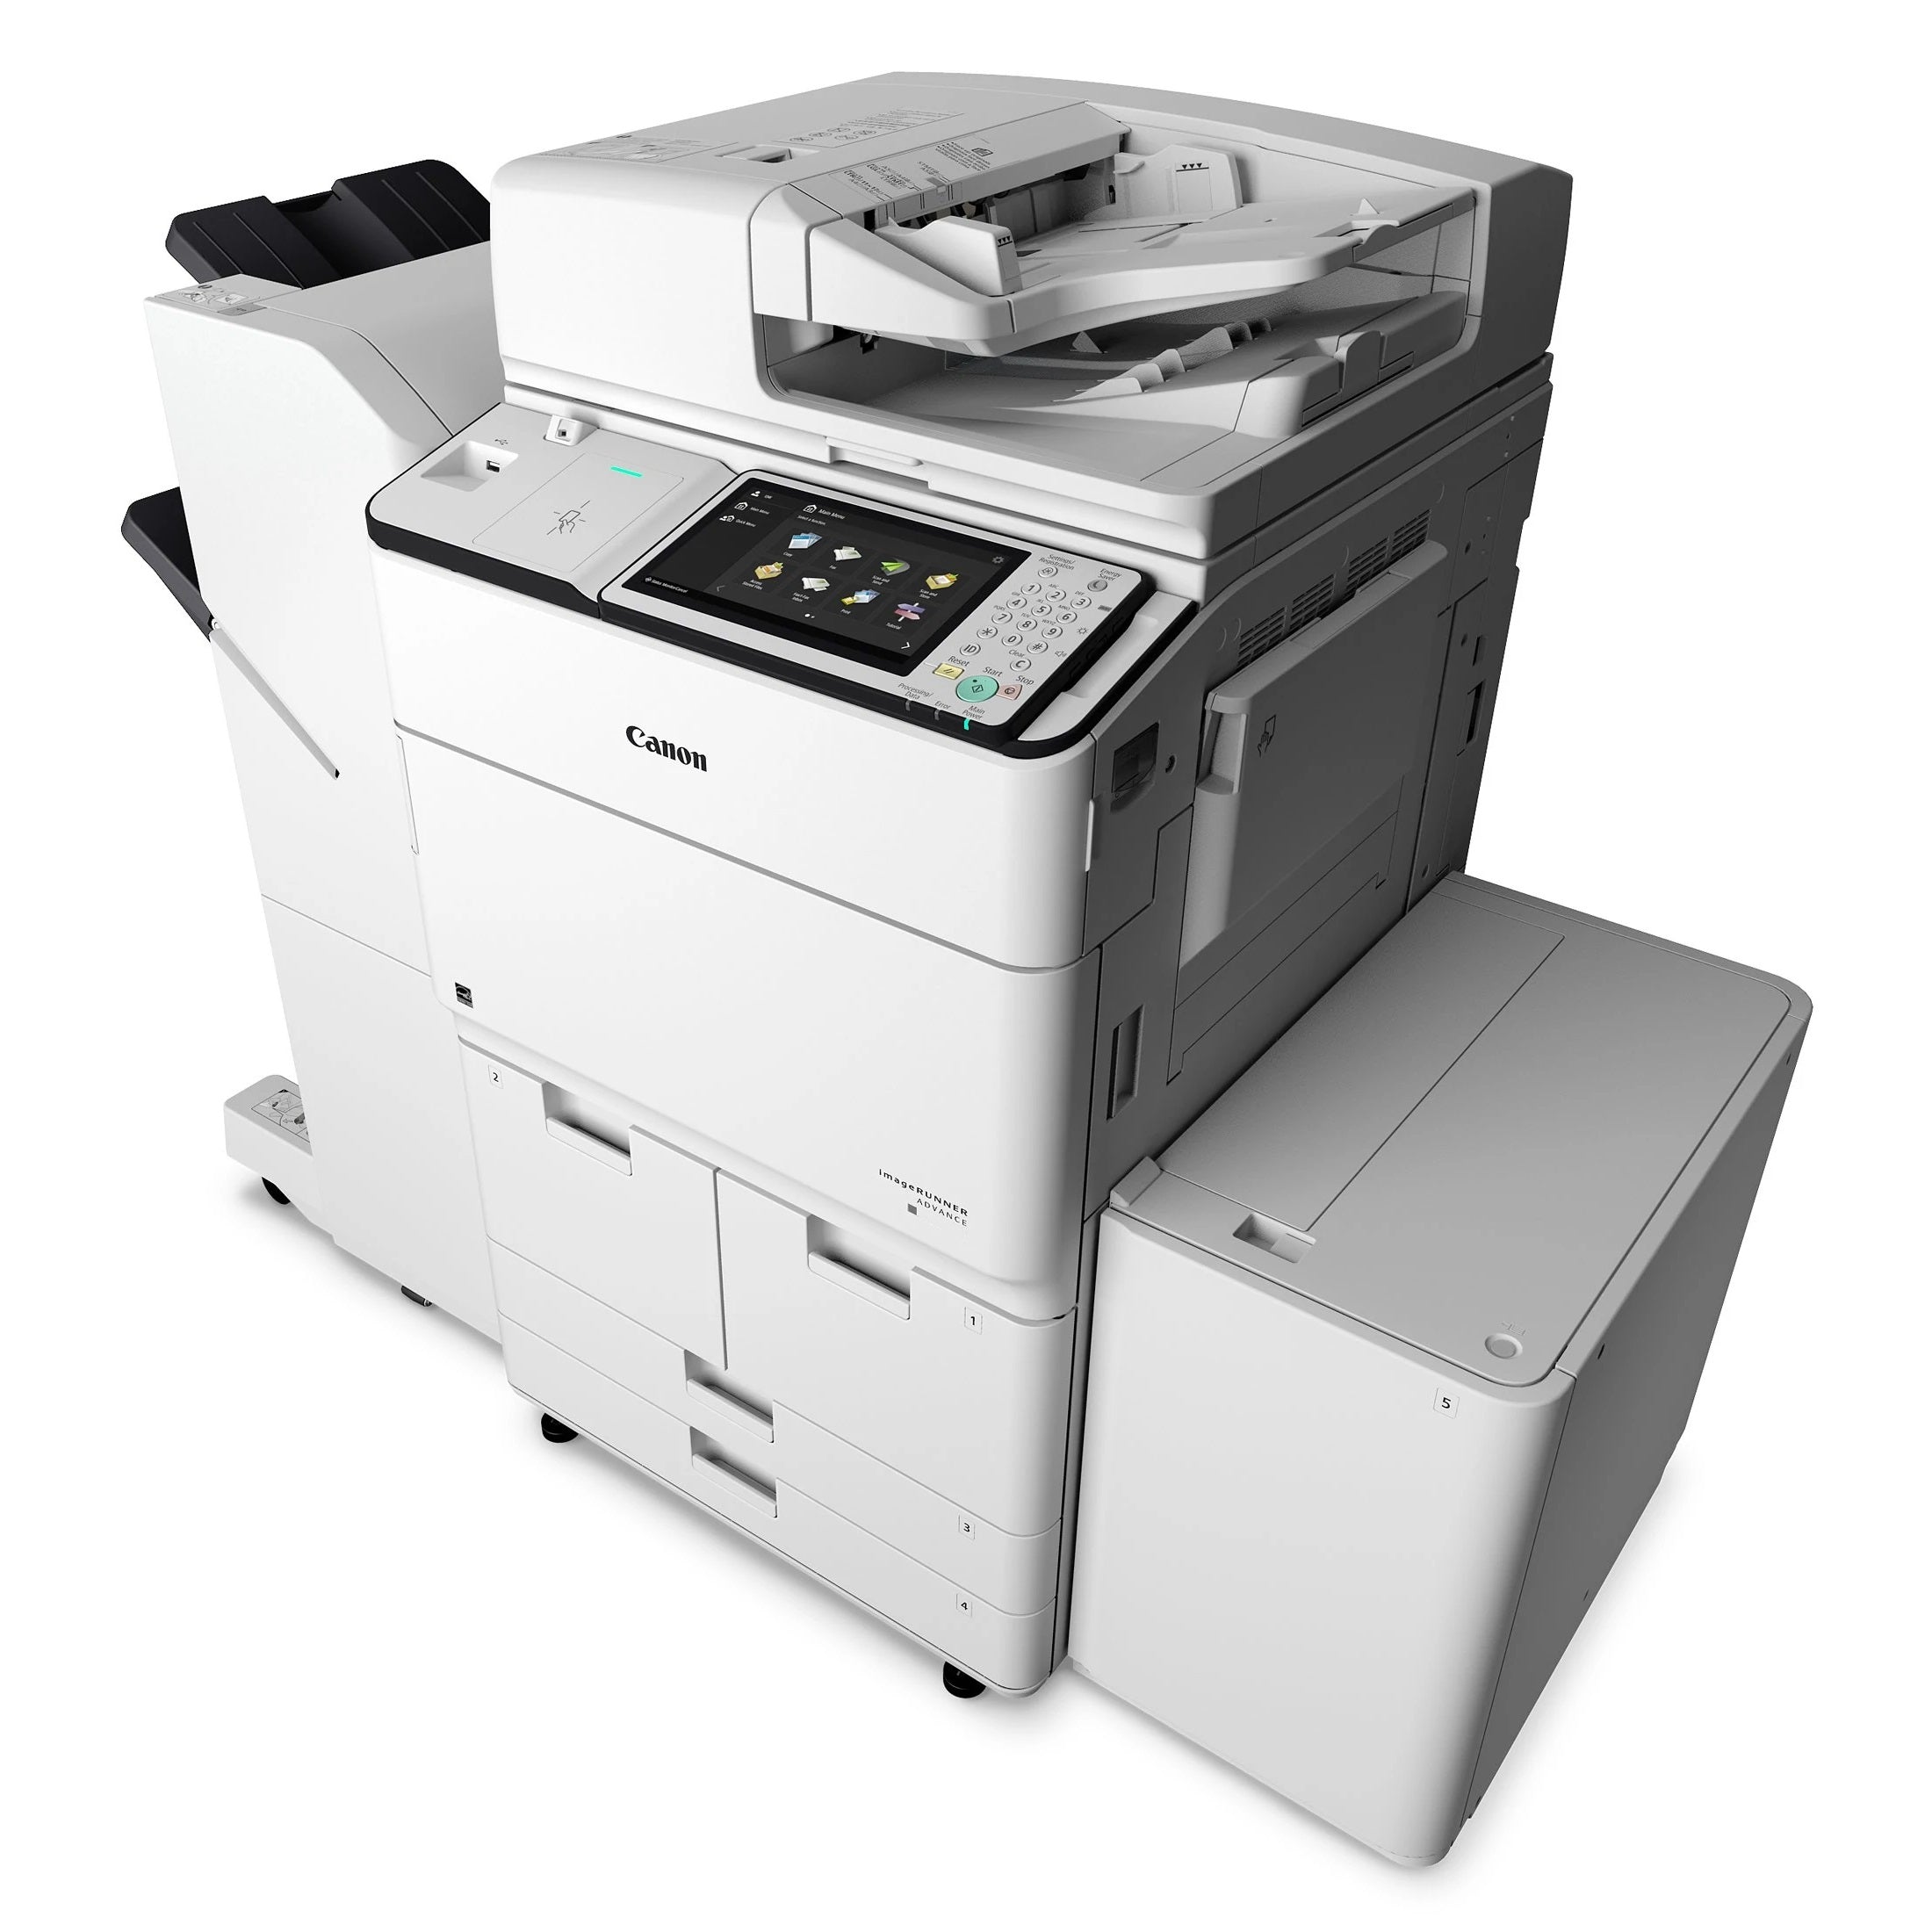 Absolute Toner $95/month Canon imageRUNNER ADVANCE C5535i (Meter below 2000) Printer Copier Scanner Color Laser Multifunction Office Copier Office Copiers In Warehouse